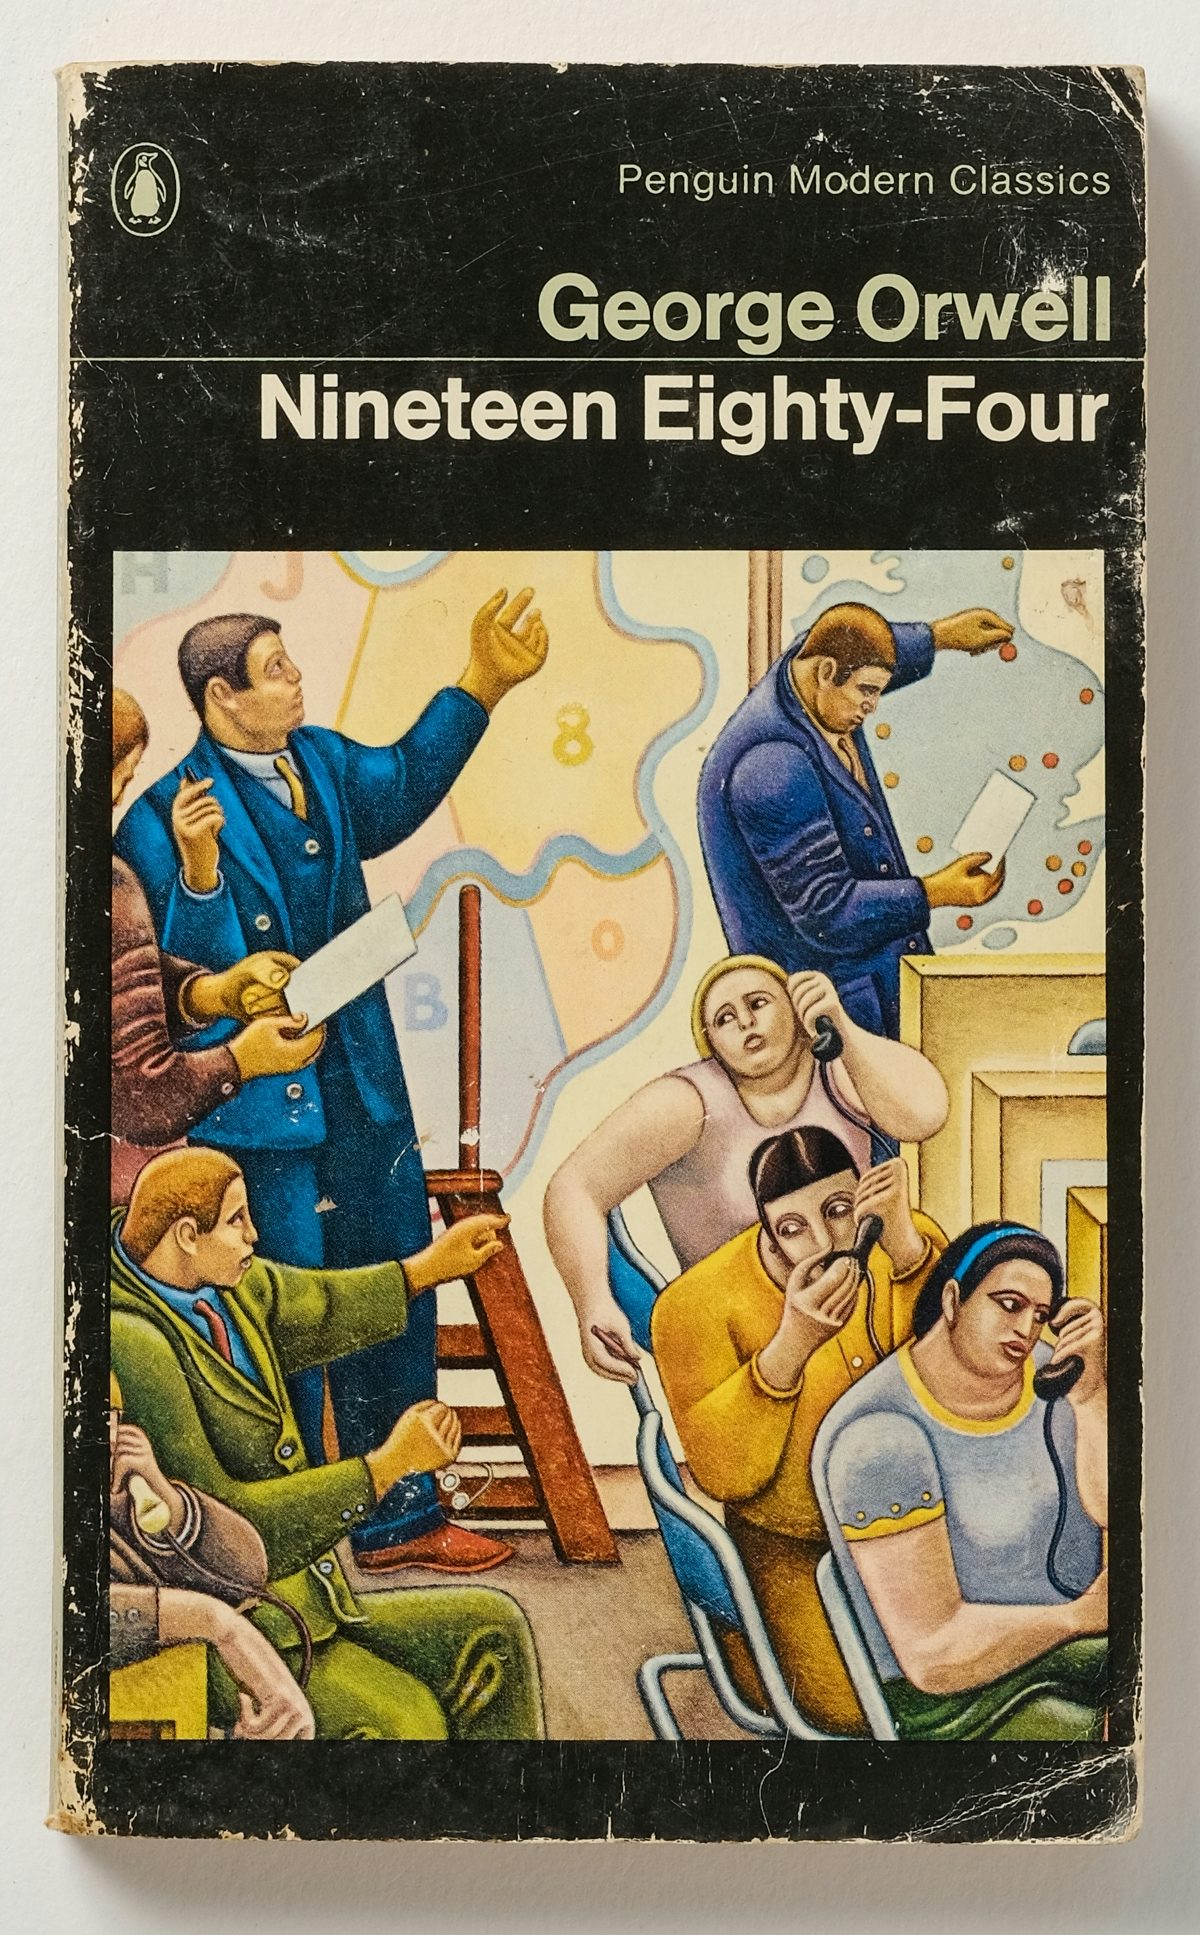 Libro Penguin Classics Nineteen Eighty Four (Penguin Modern